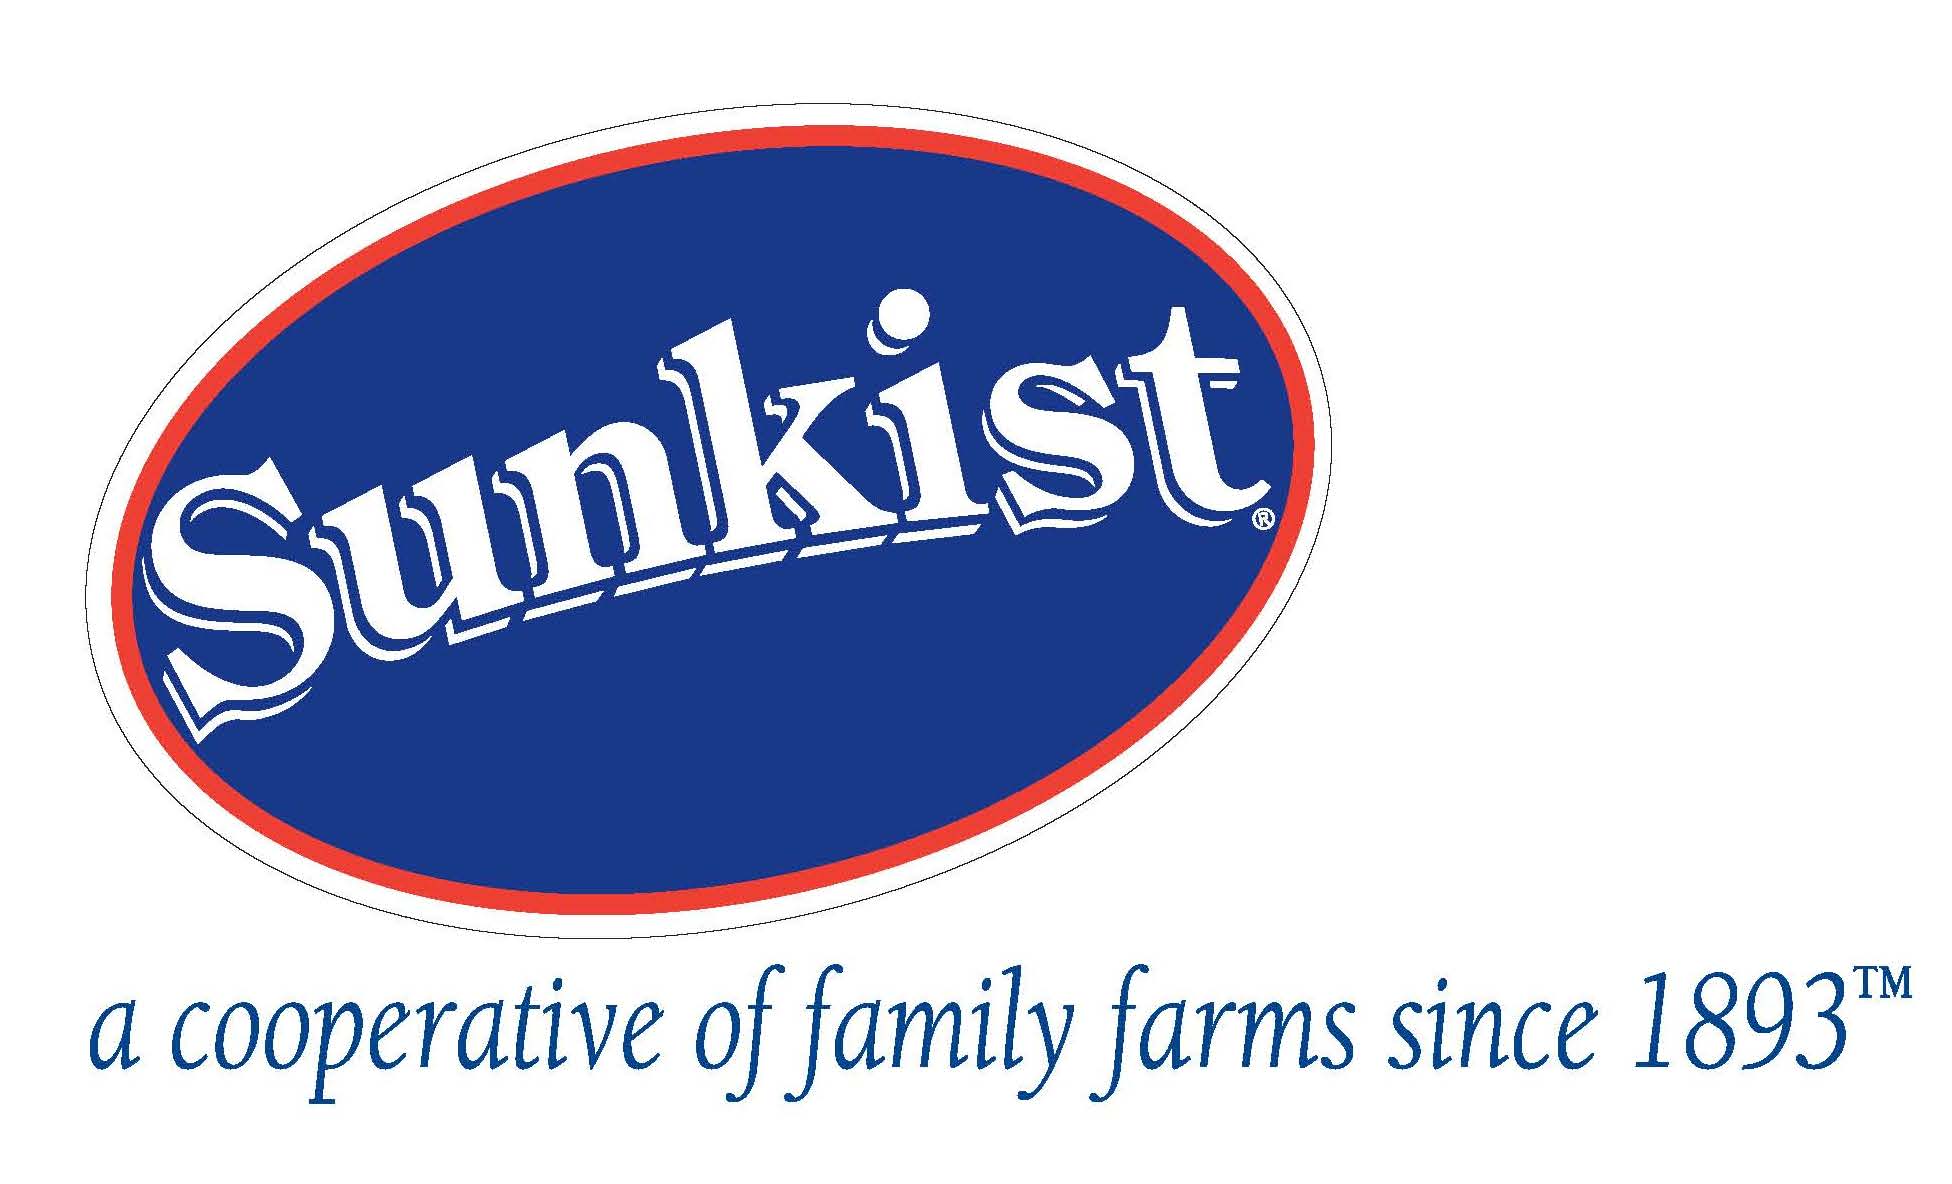 New Sunkist Logo - Sunkist logo 2011 | Agricultural Council of California